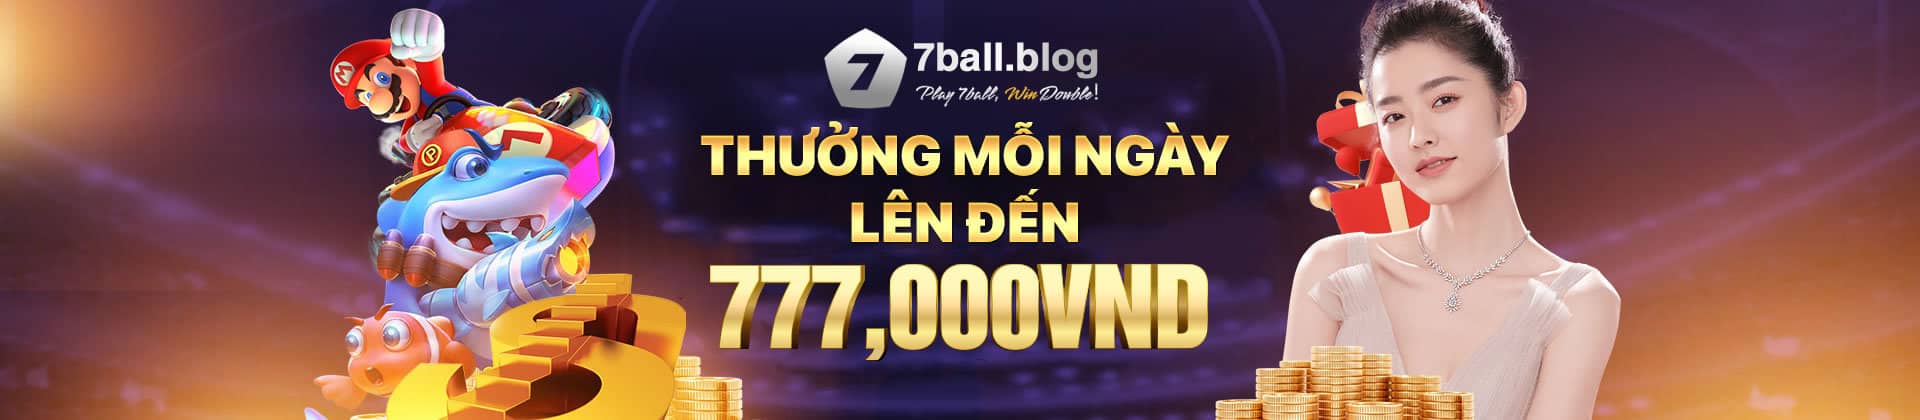 7ball casino banner 3